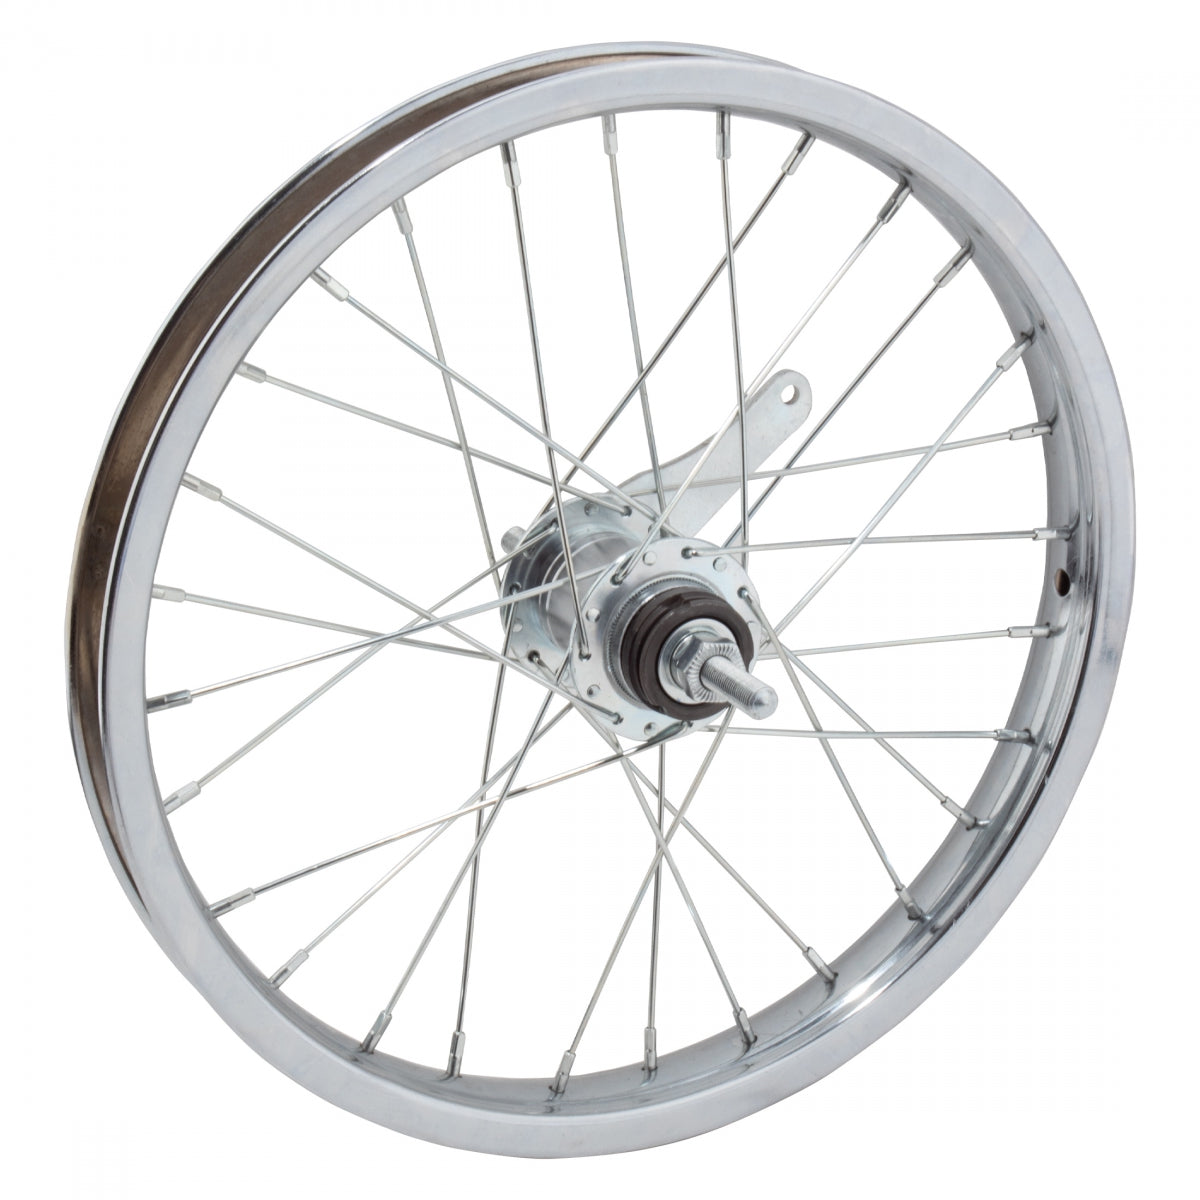 WheelMaster 18" x 1.75 Cb Rear Bicycle Wheel, 28H, Steel, Bolt On, Silver